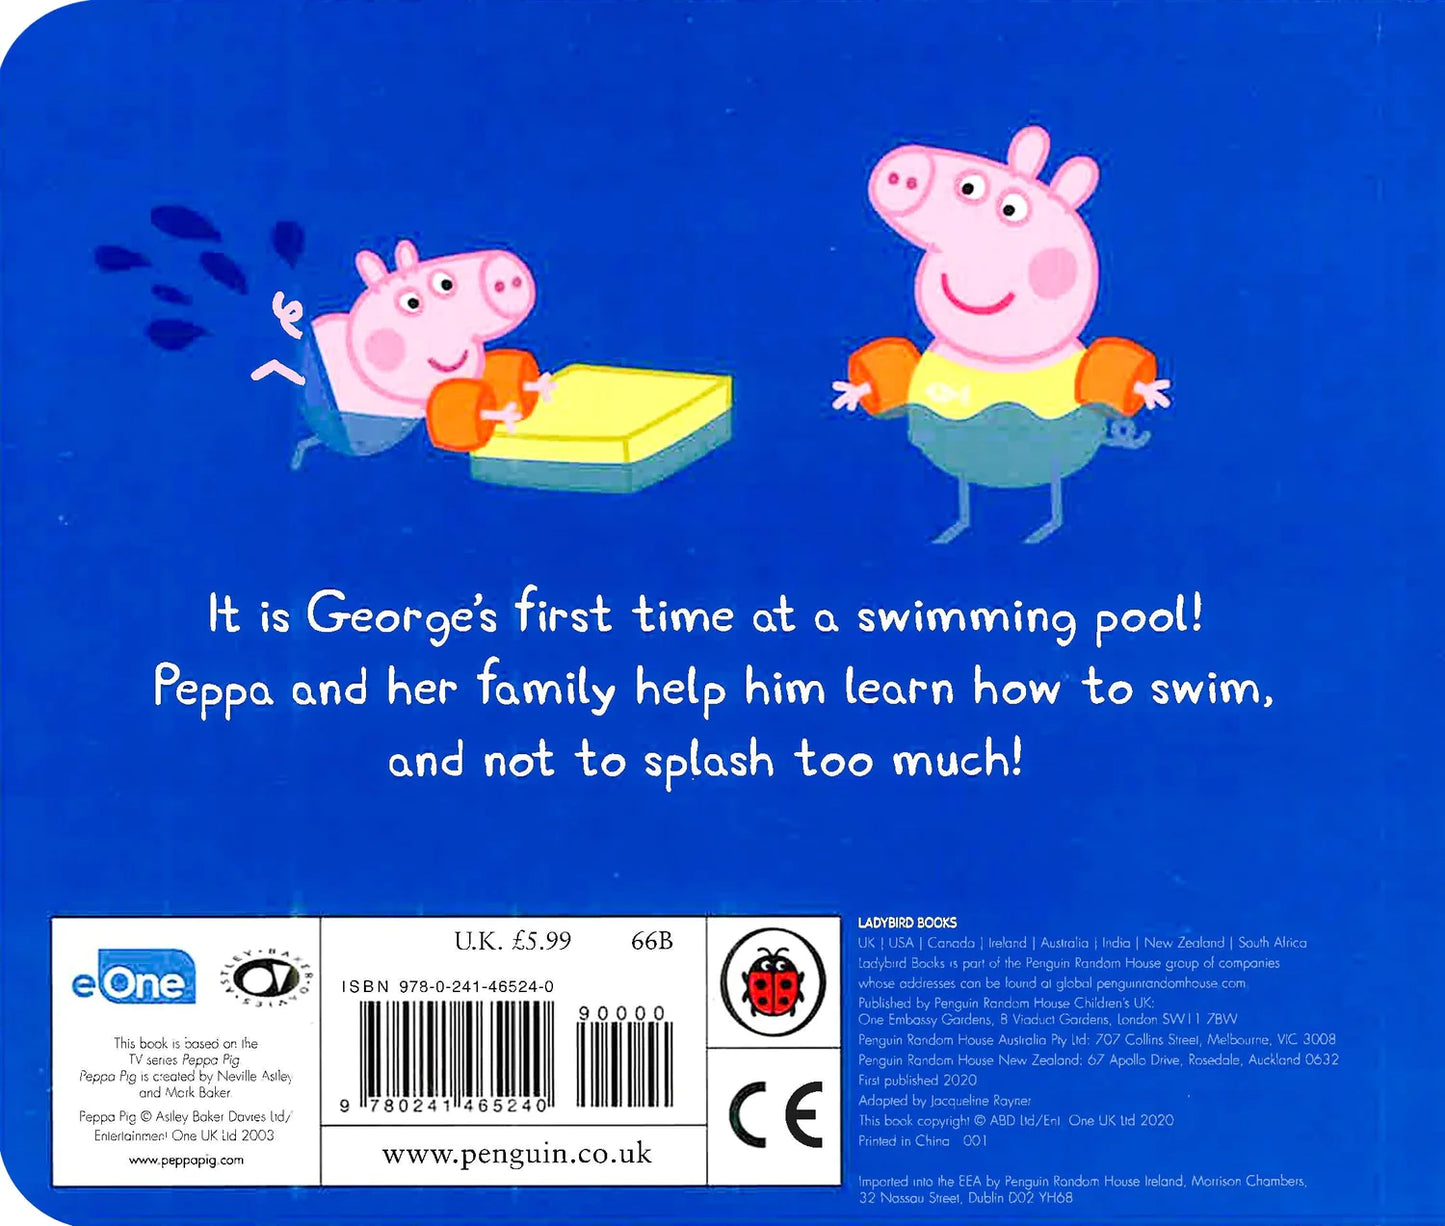 Peppa goes Swimming Board Book